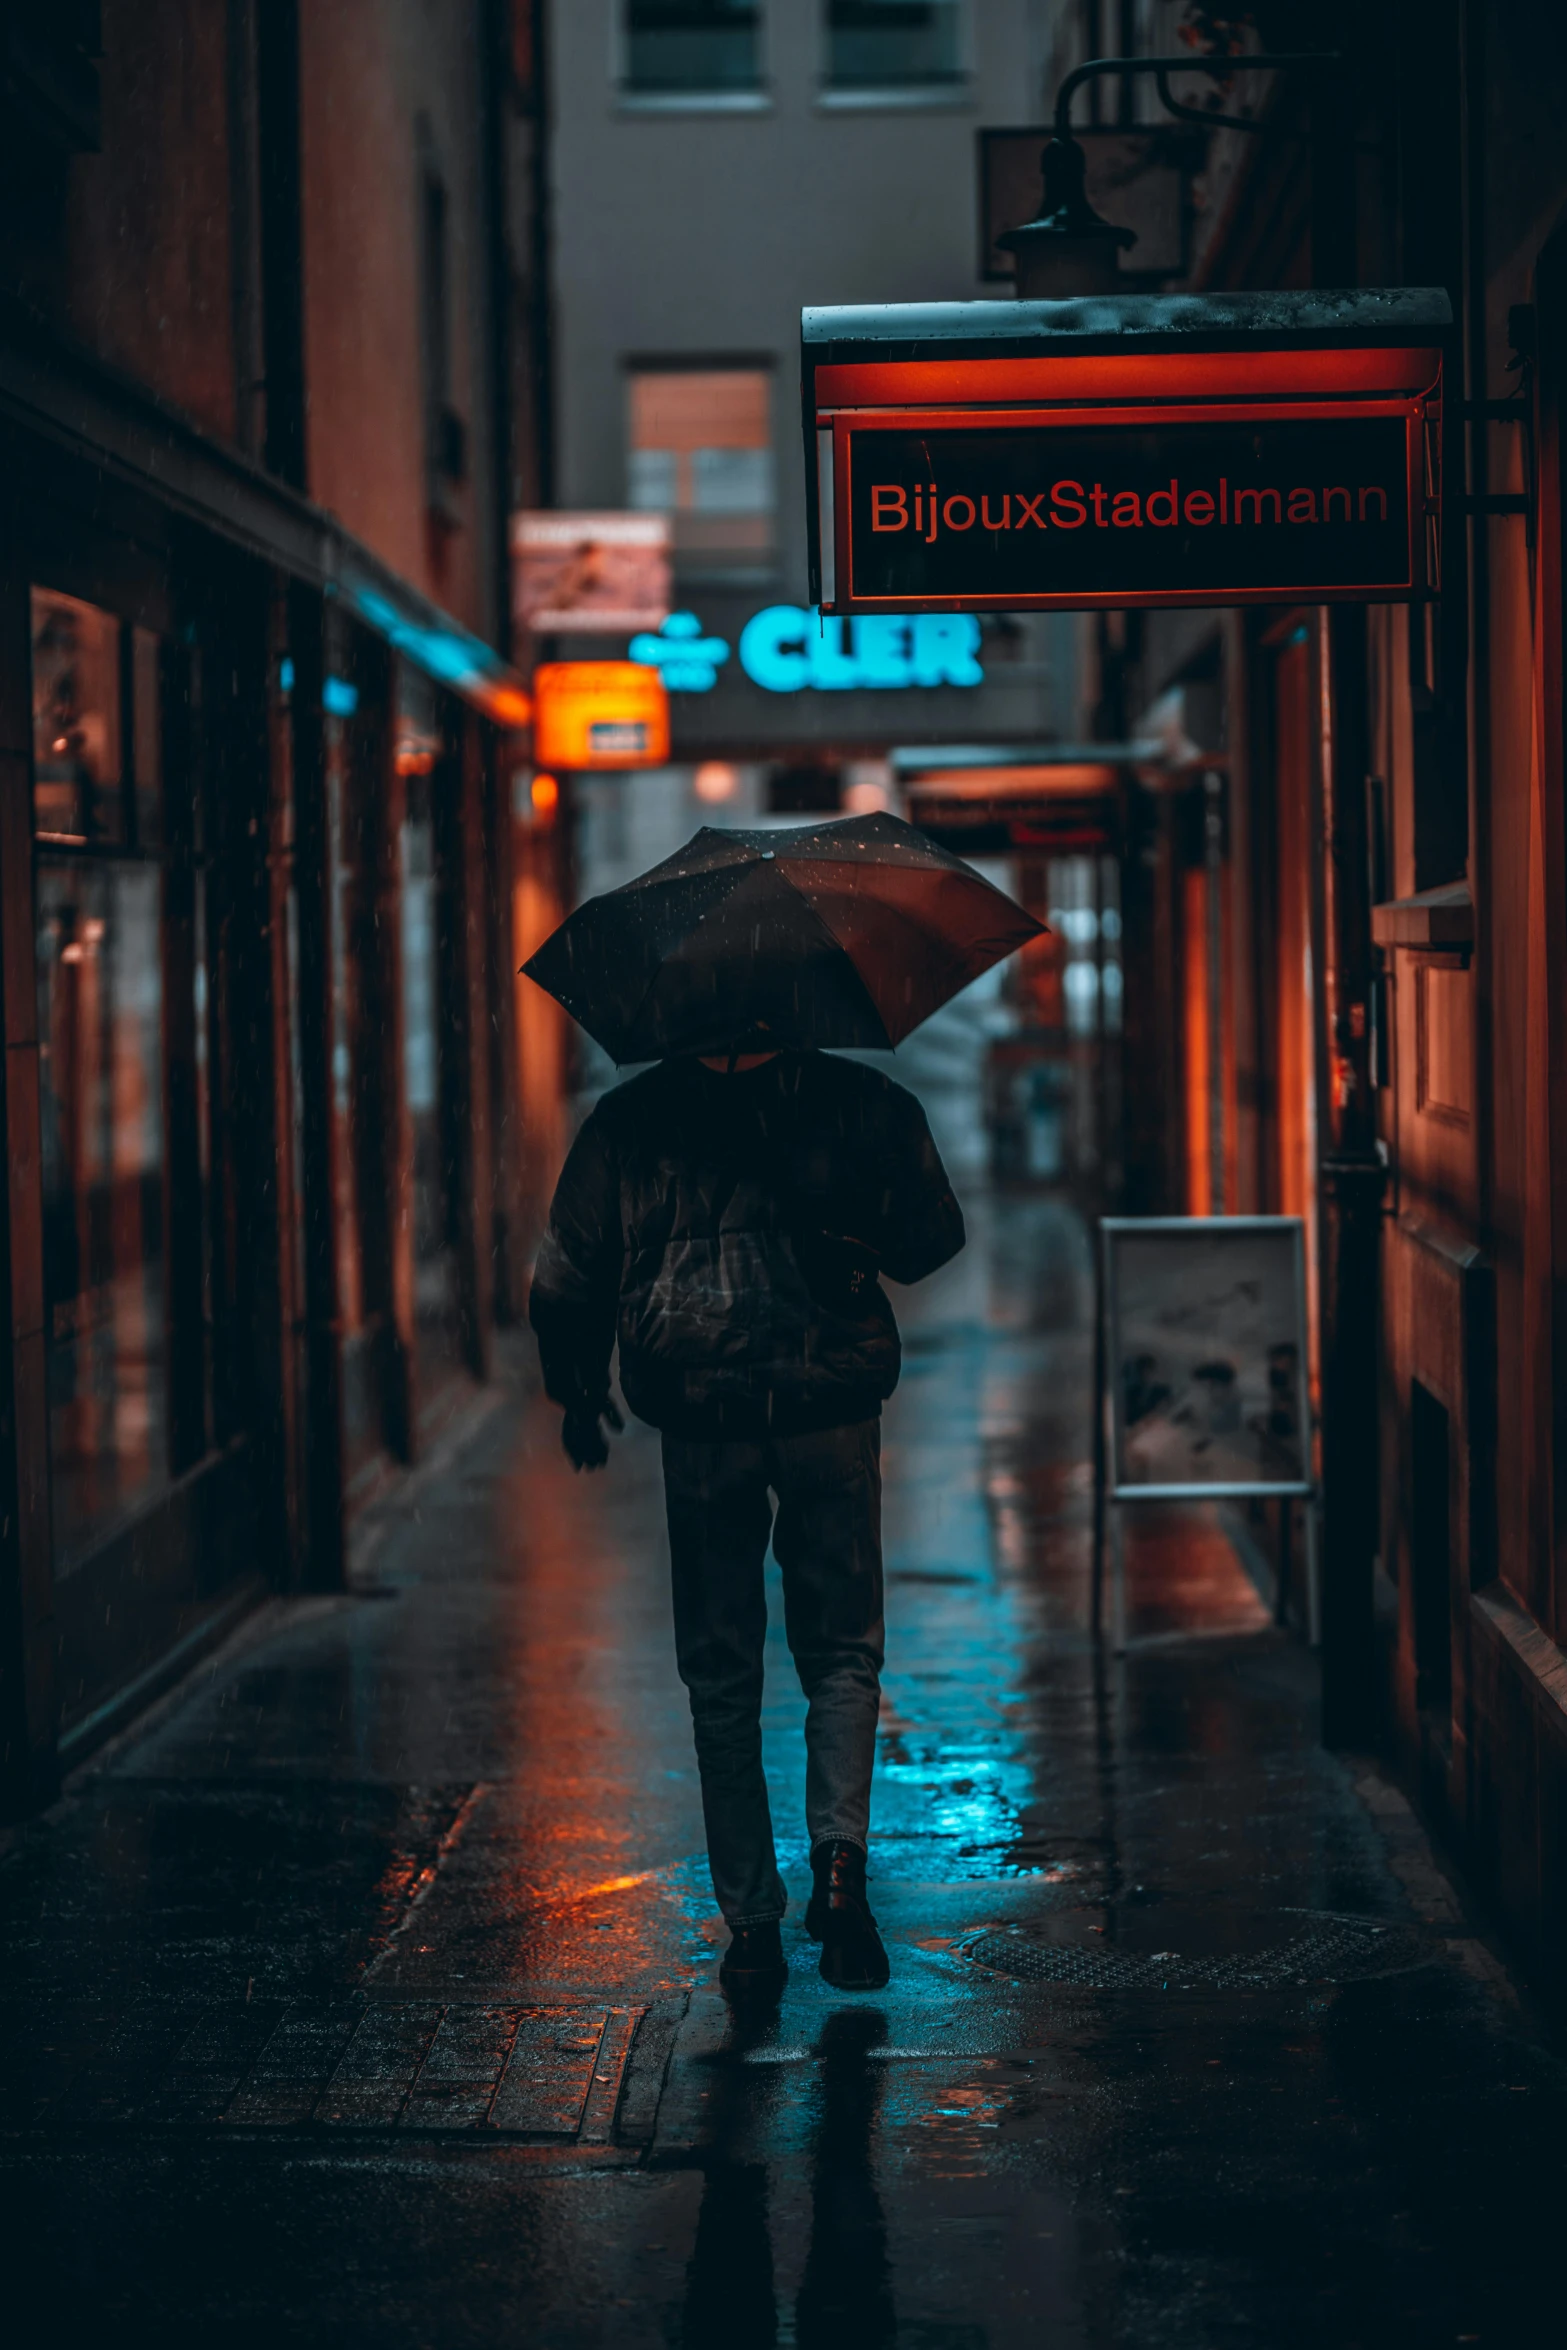 a person walking down a street holding an umbrella, by Raphaël Collin, unsplash contest winner, ominous neon lighting, sad man, slightly pixelated, multiple stories